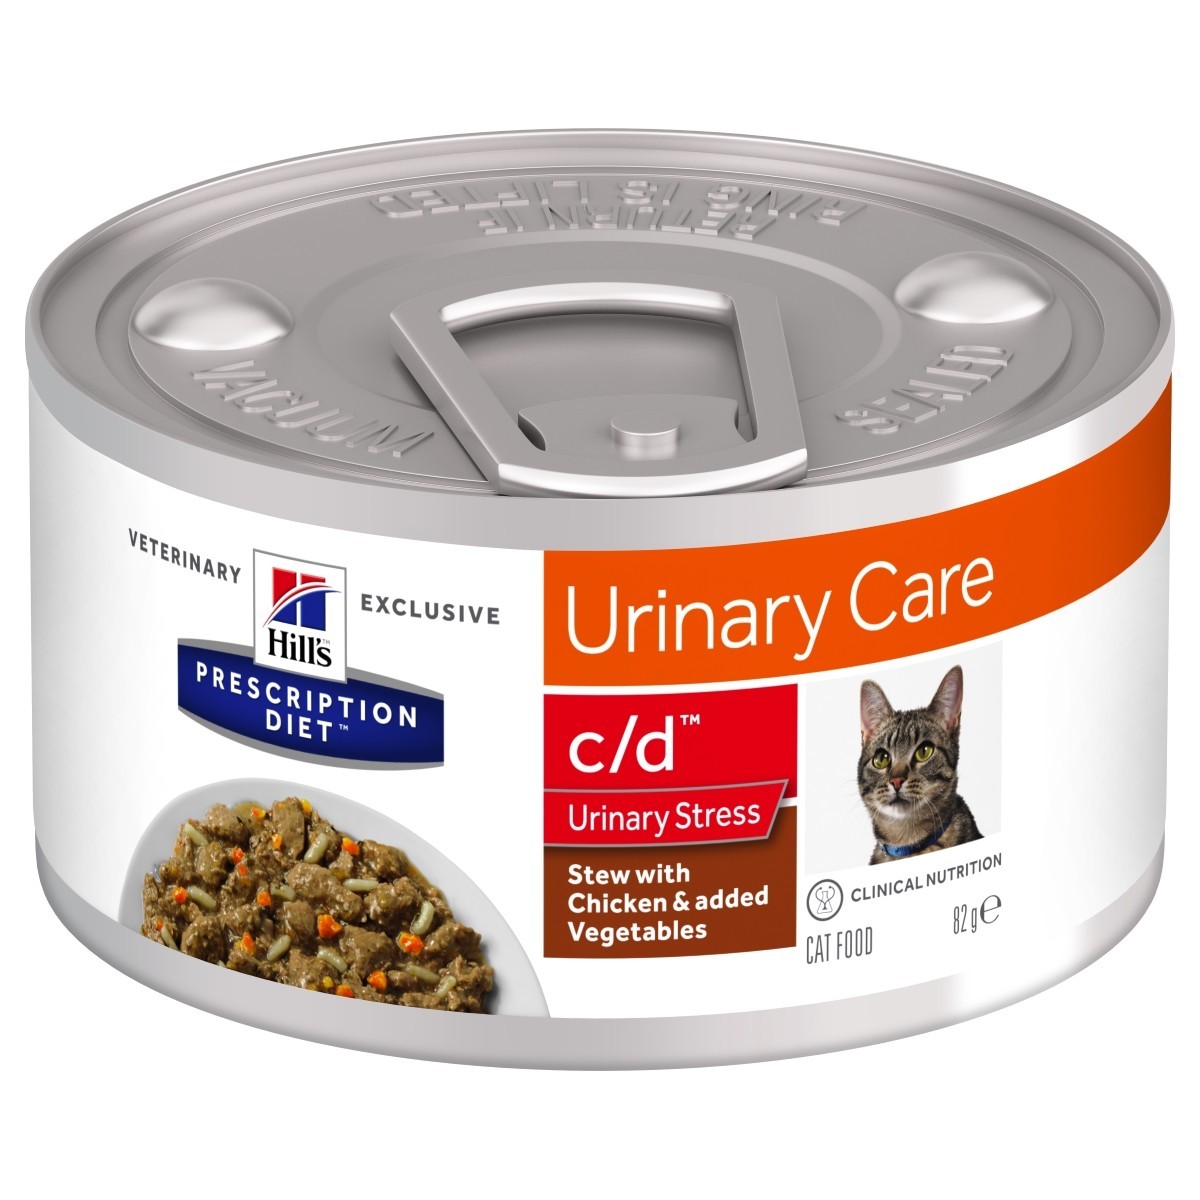 cat food wet veterinary diet urinary hills prescription